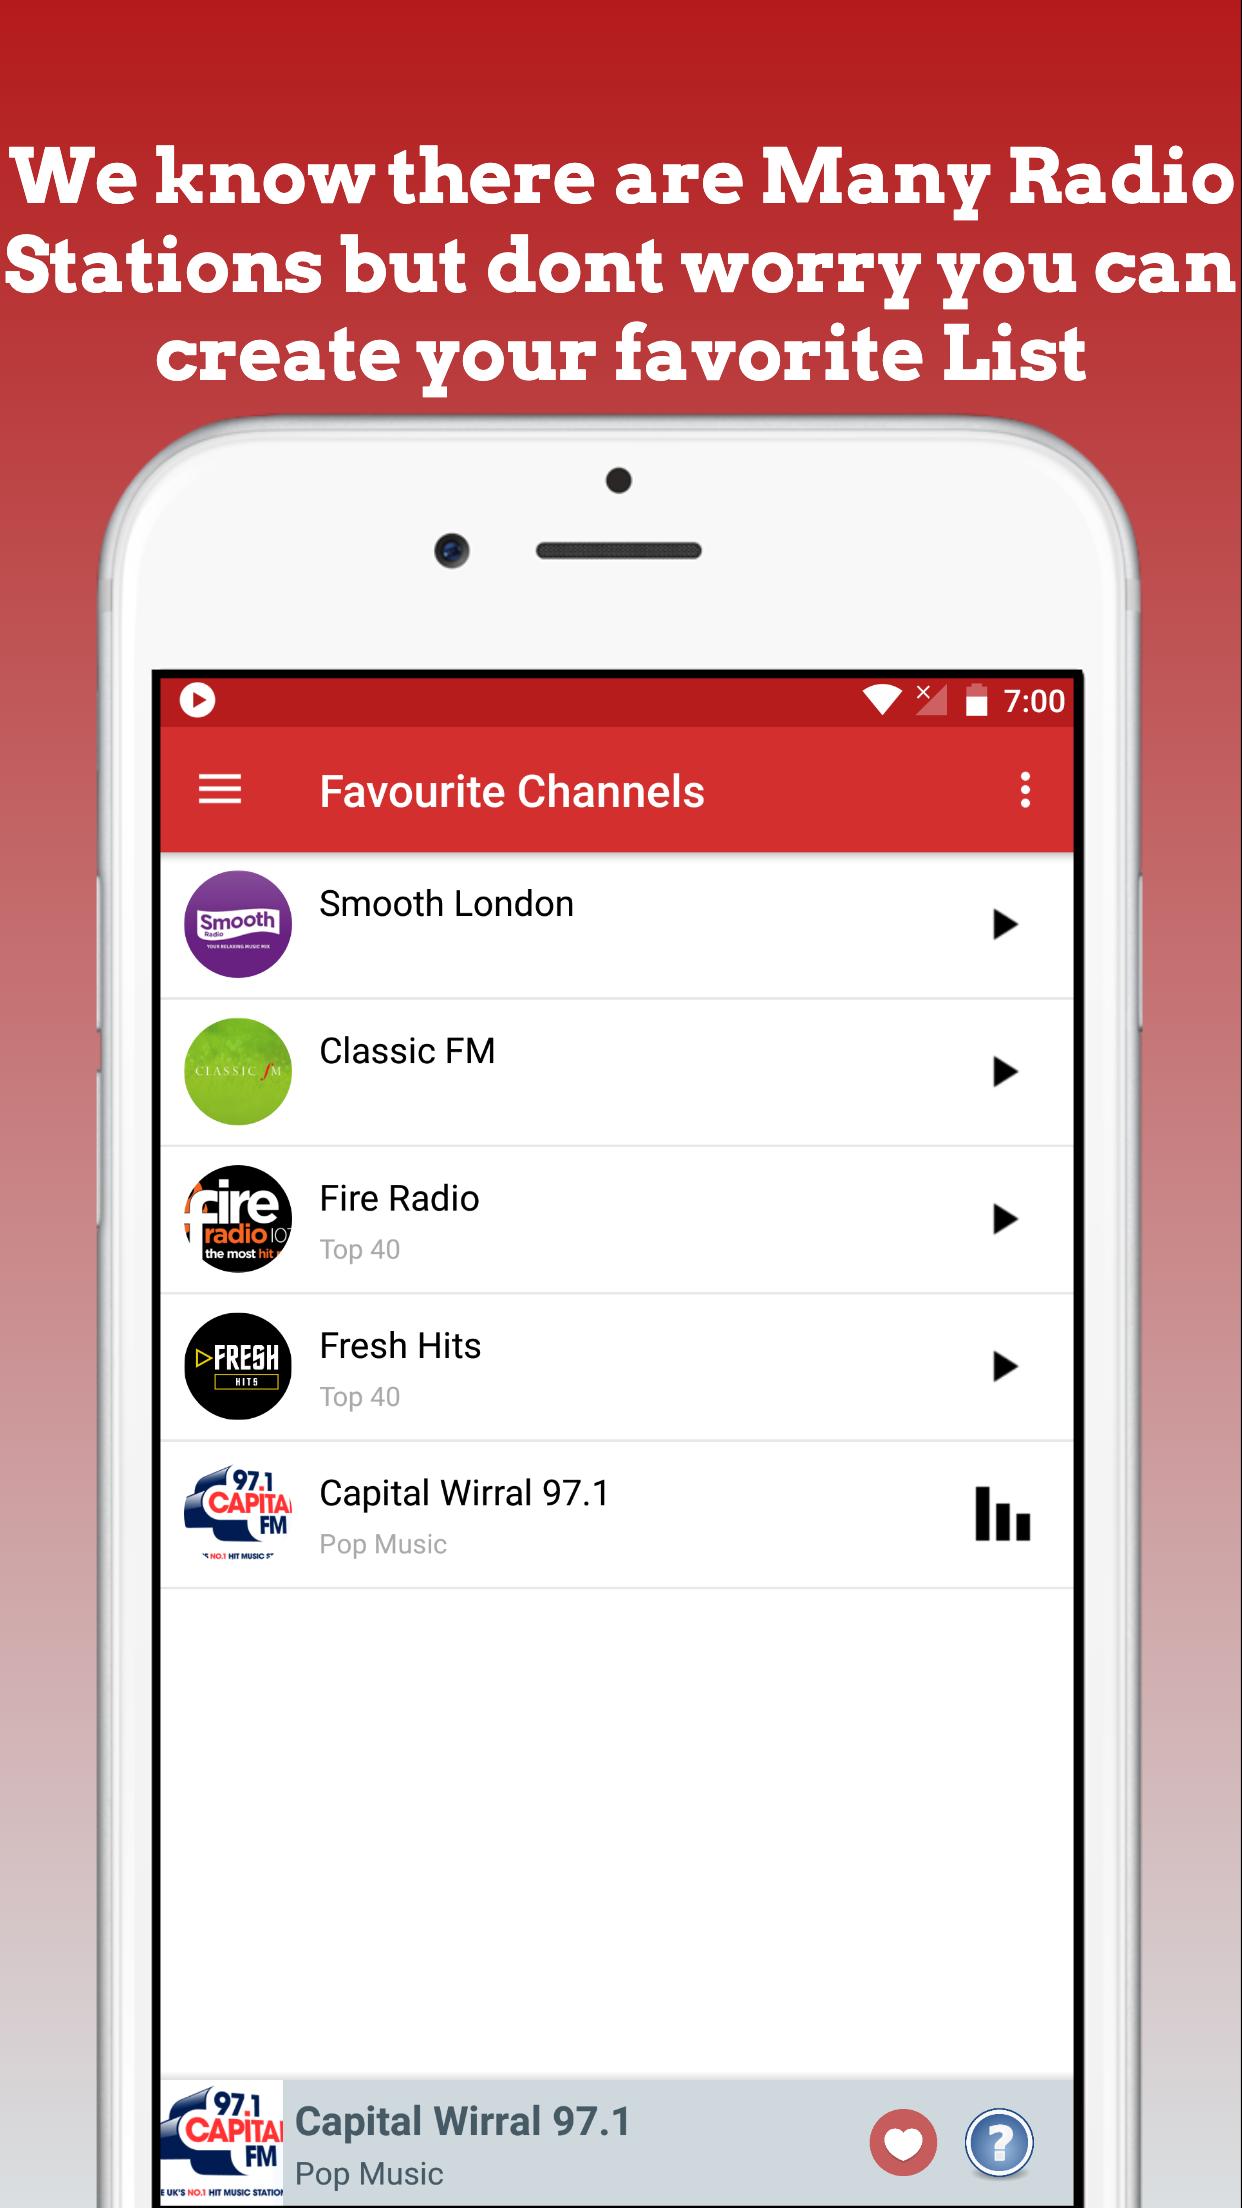 Radio UK - United Kingdom Radio Stations Online for Android - APK Download